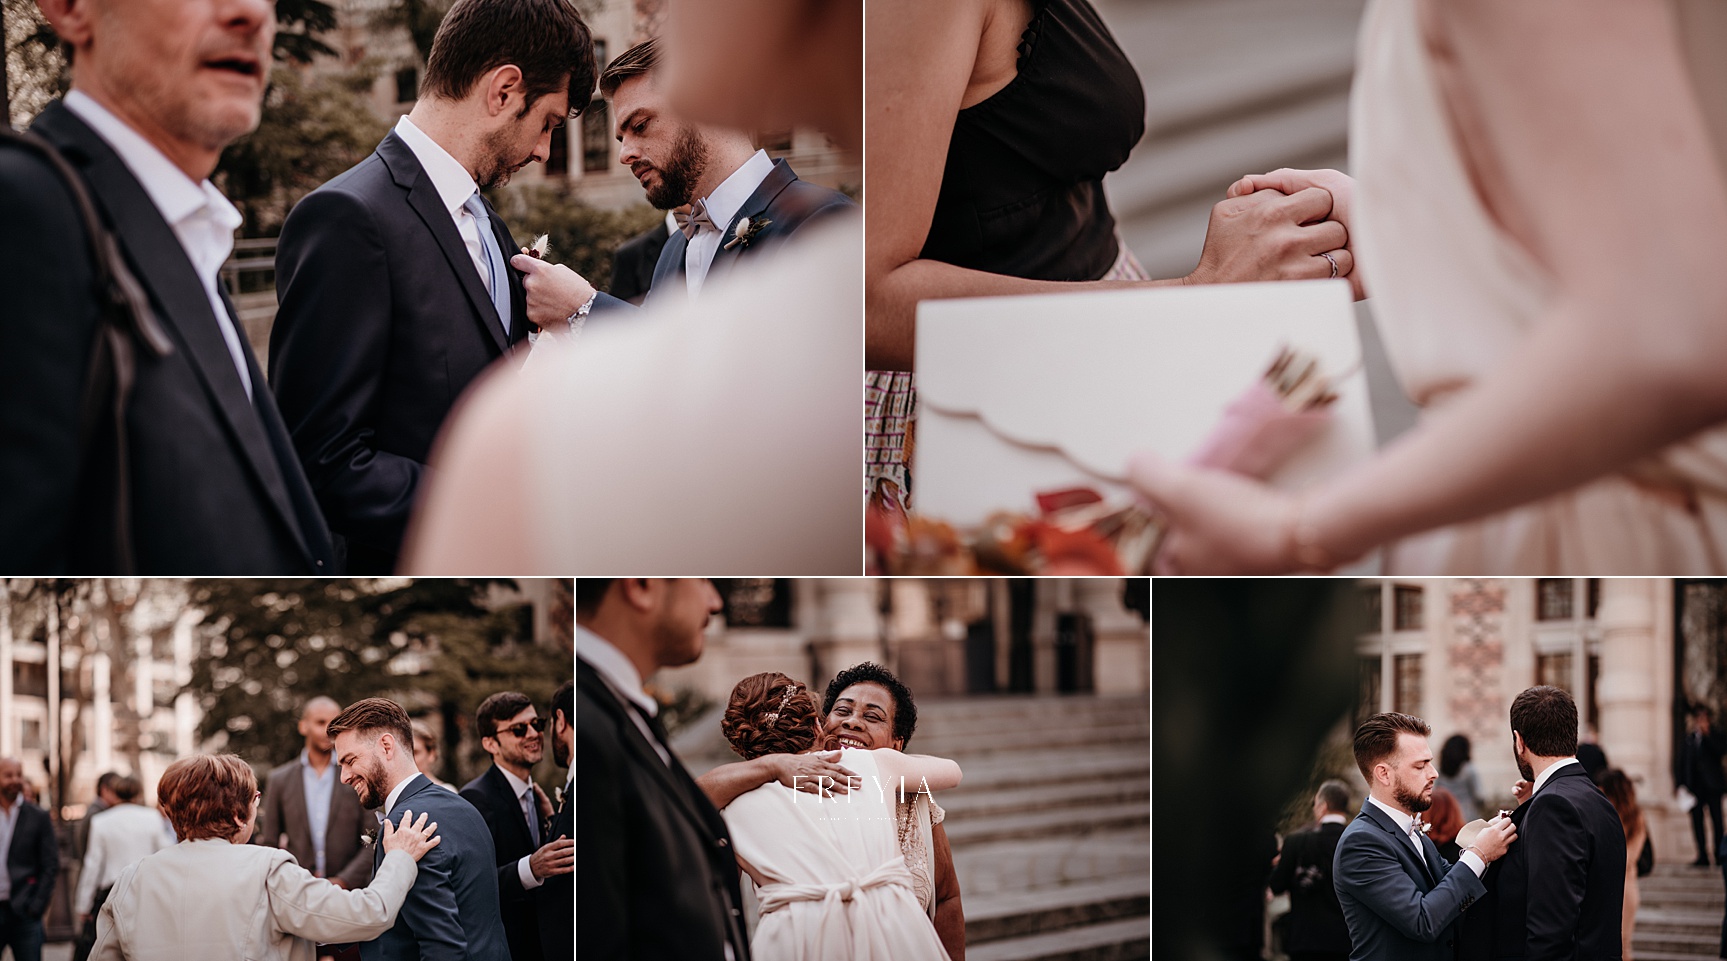 P + F |  mariage reportage alternatif moody intime vintage naturel boho boheme |  PHOTOGRAPHE mariage PARIS france destination  | FREYIA photography_-93.jpg (Copy)